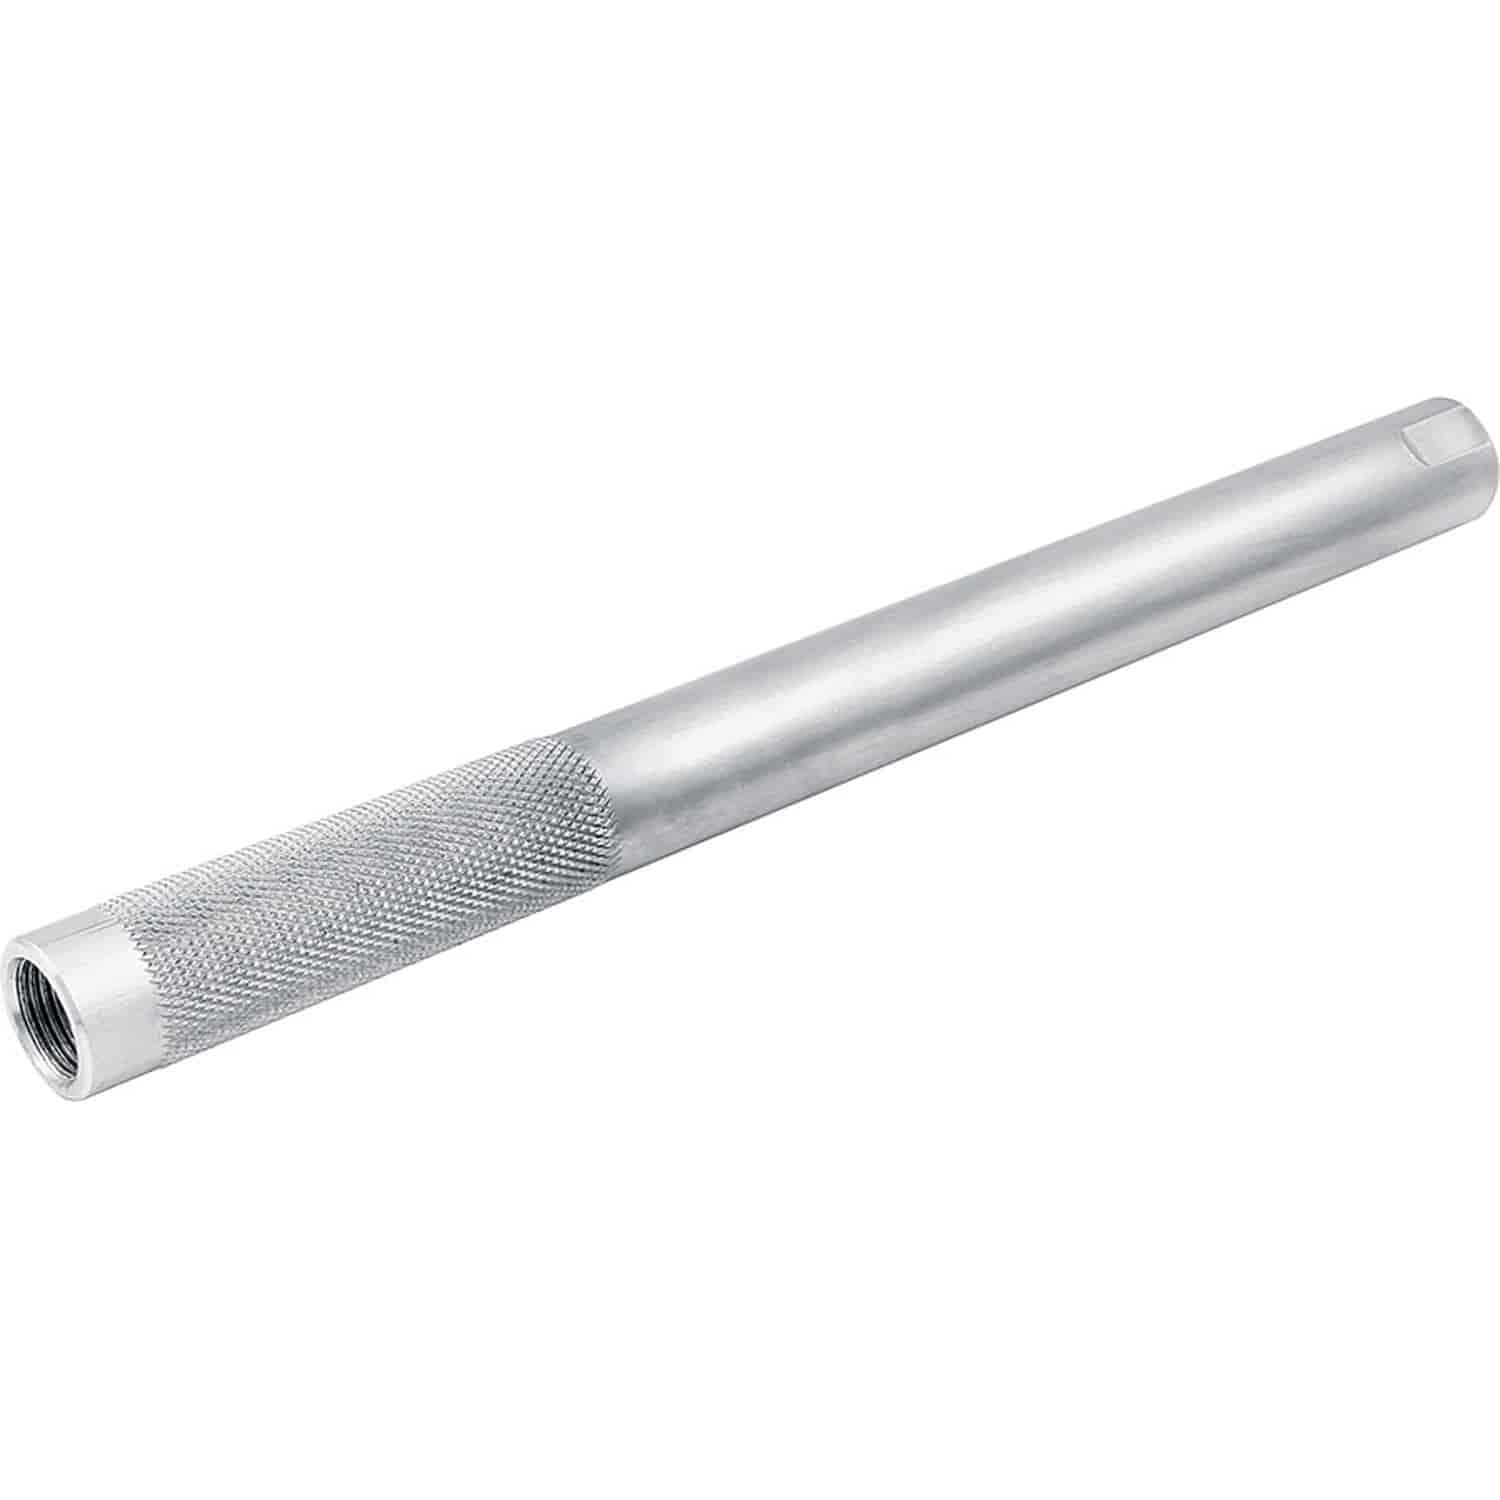 Swedged Aluminum Tie Rod Tube Length: 21